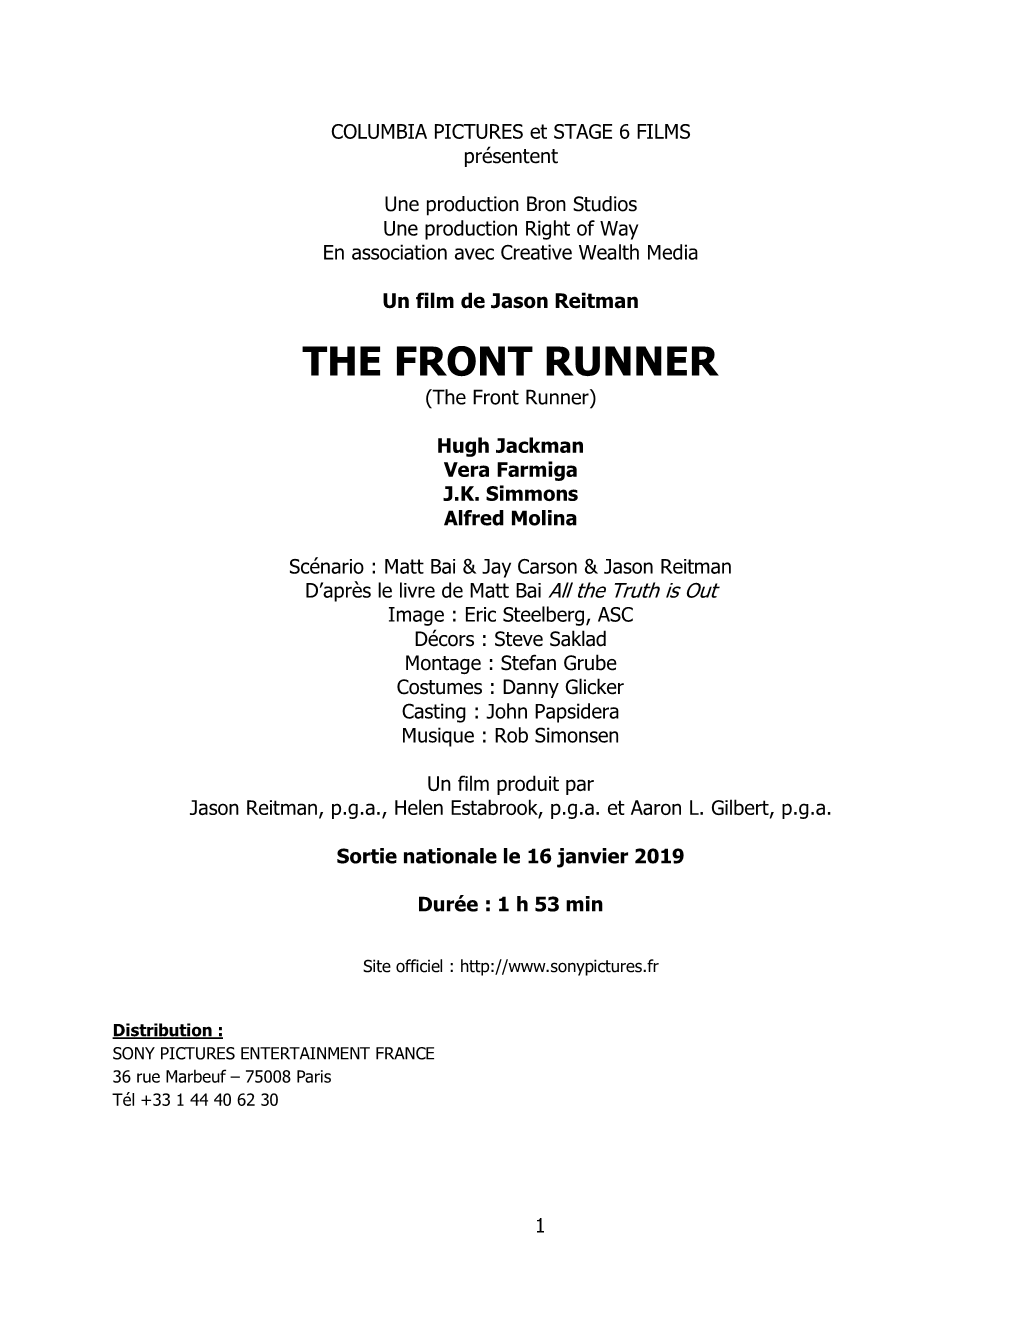 THE FRONT RUNNER (The Front Runner)